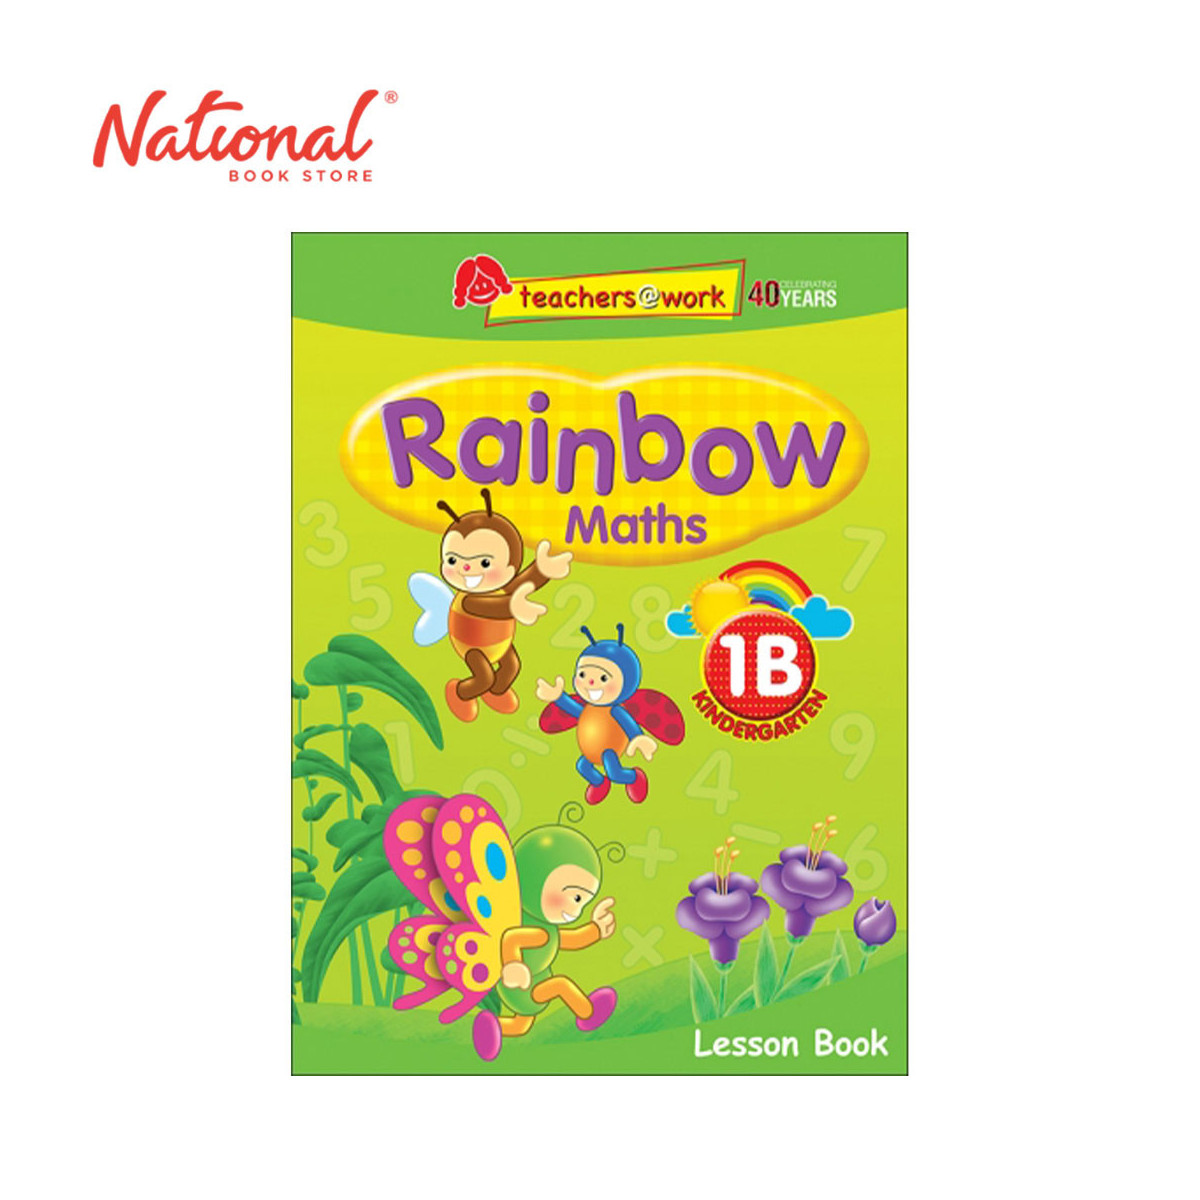 Rainbow Maths Lesson Book Kindergarten 1B by Chattryn Sonata - Trade Paperback - Preschool Books